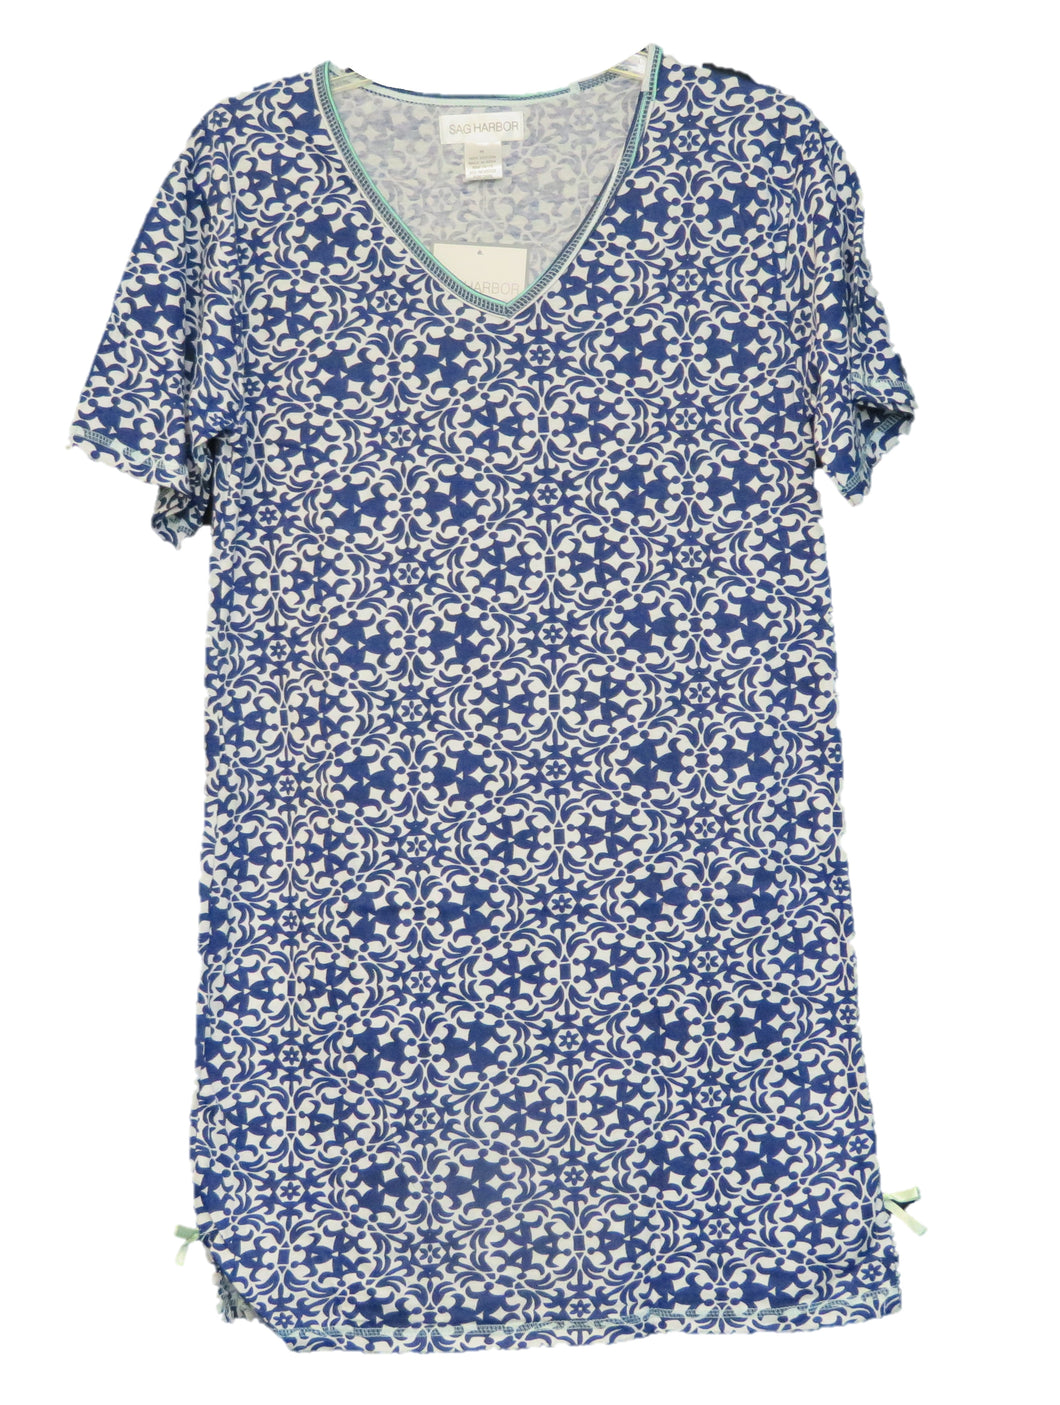 Sag Harbor Sleepwear Printed Sleepshirt 100% Cotton Style N93085